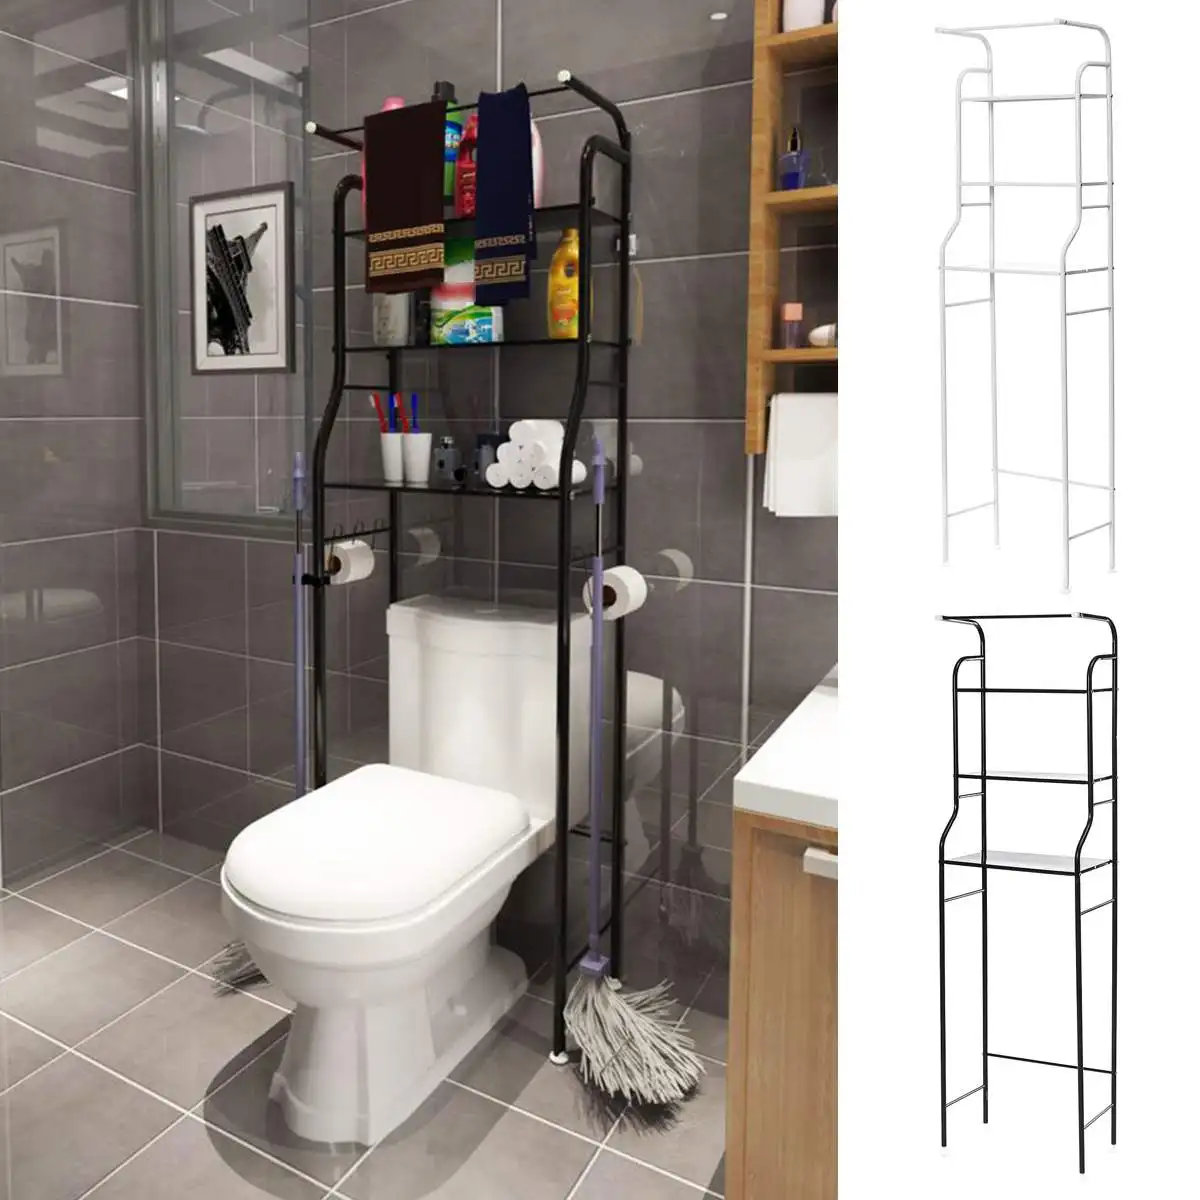 

Storage Shelf Bathroom Space Saver Storage Shelf Over Toilet With Roll Holder And Towel HookKitchen Washing Machine Storage Hold